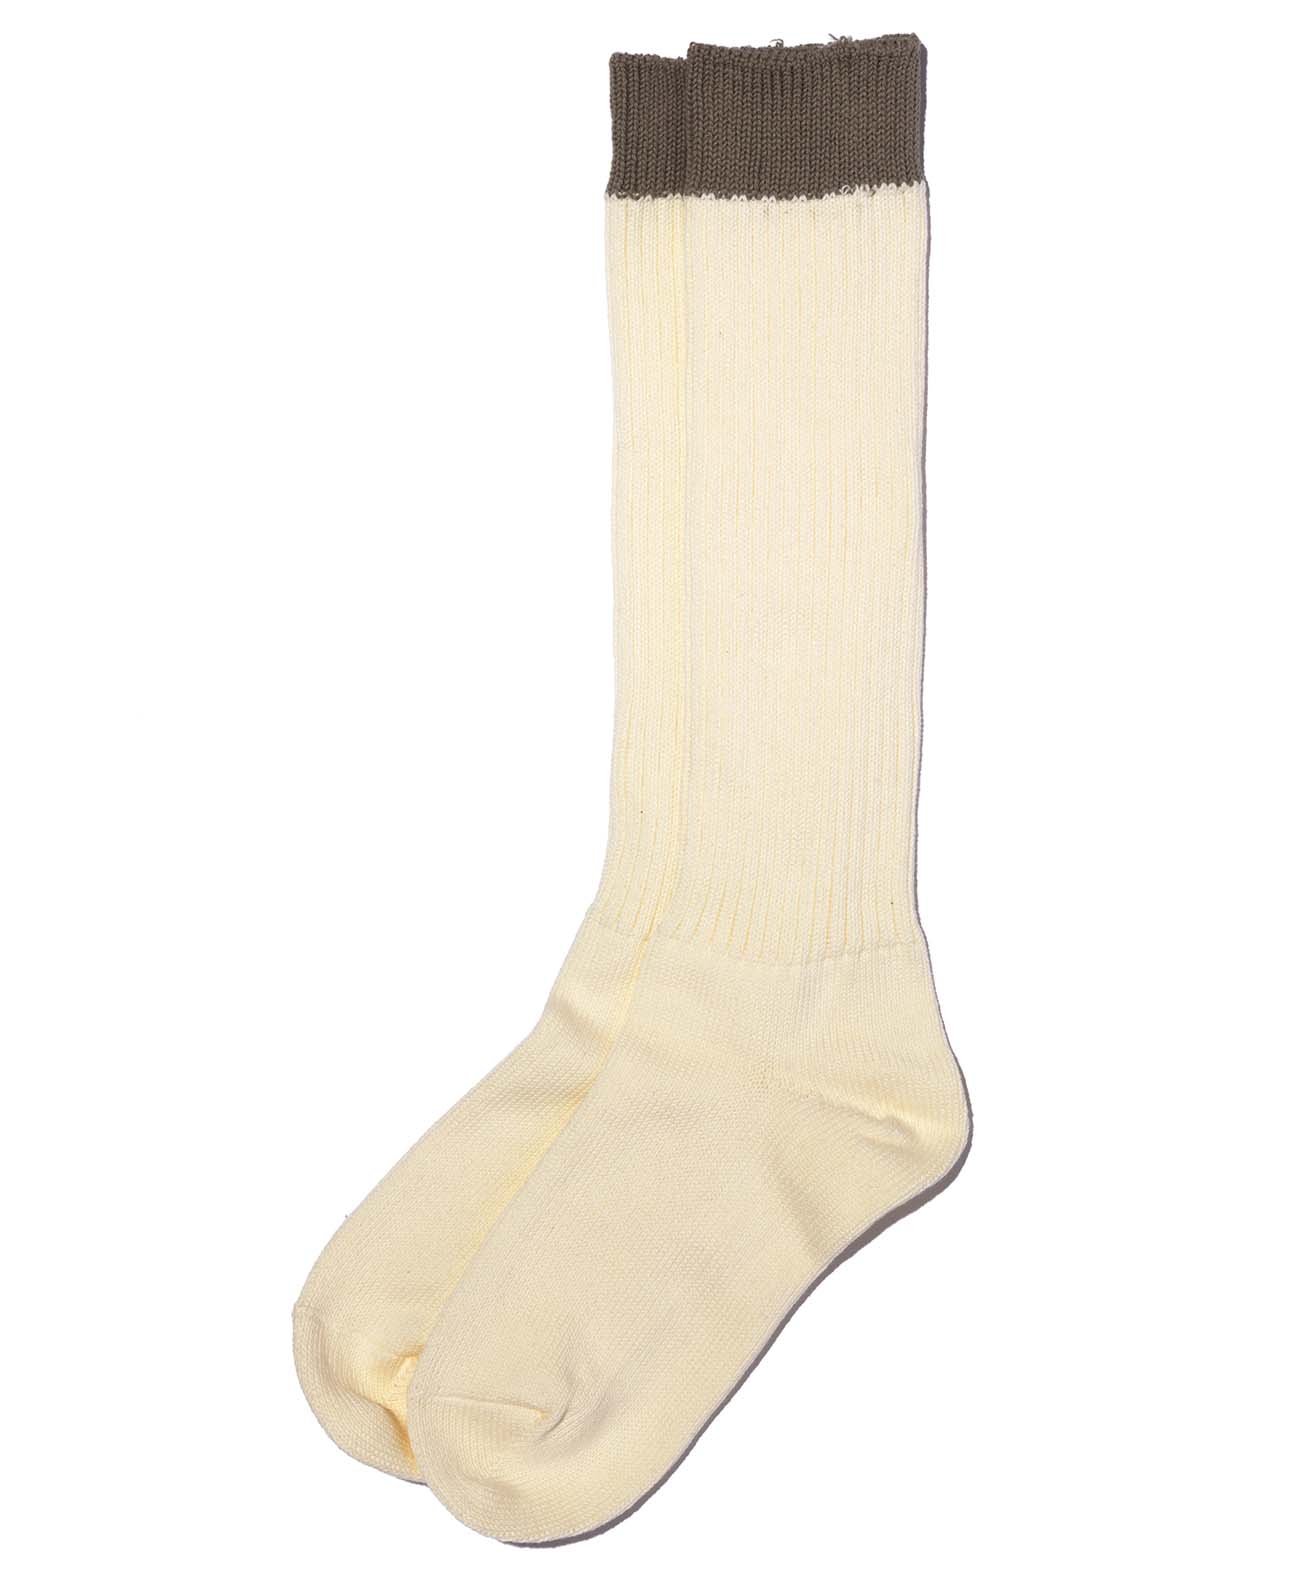 Boots Socks / Ivory / Grey